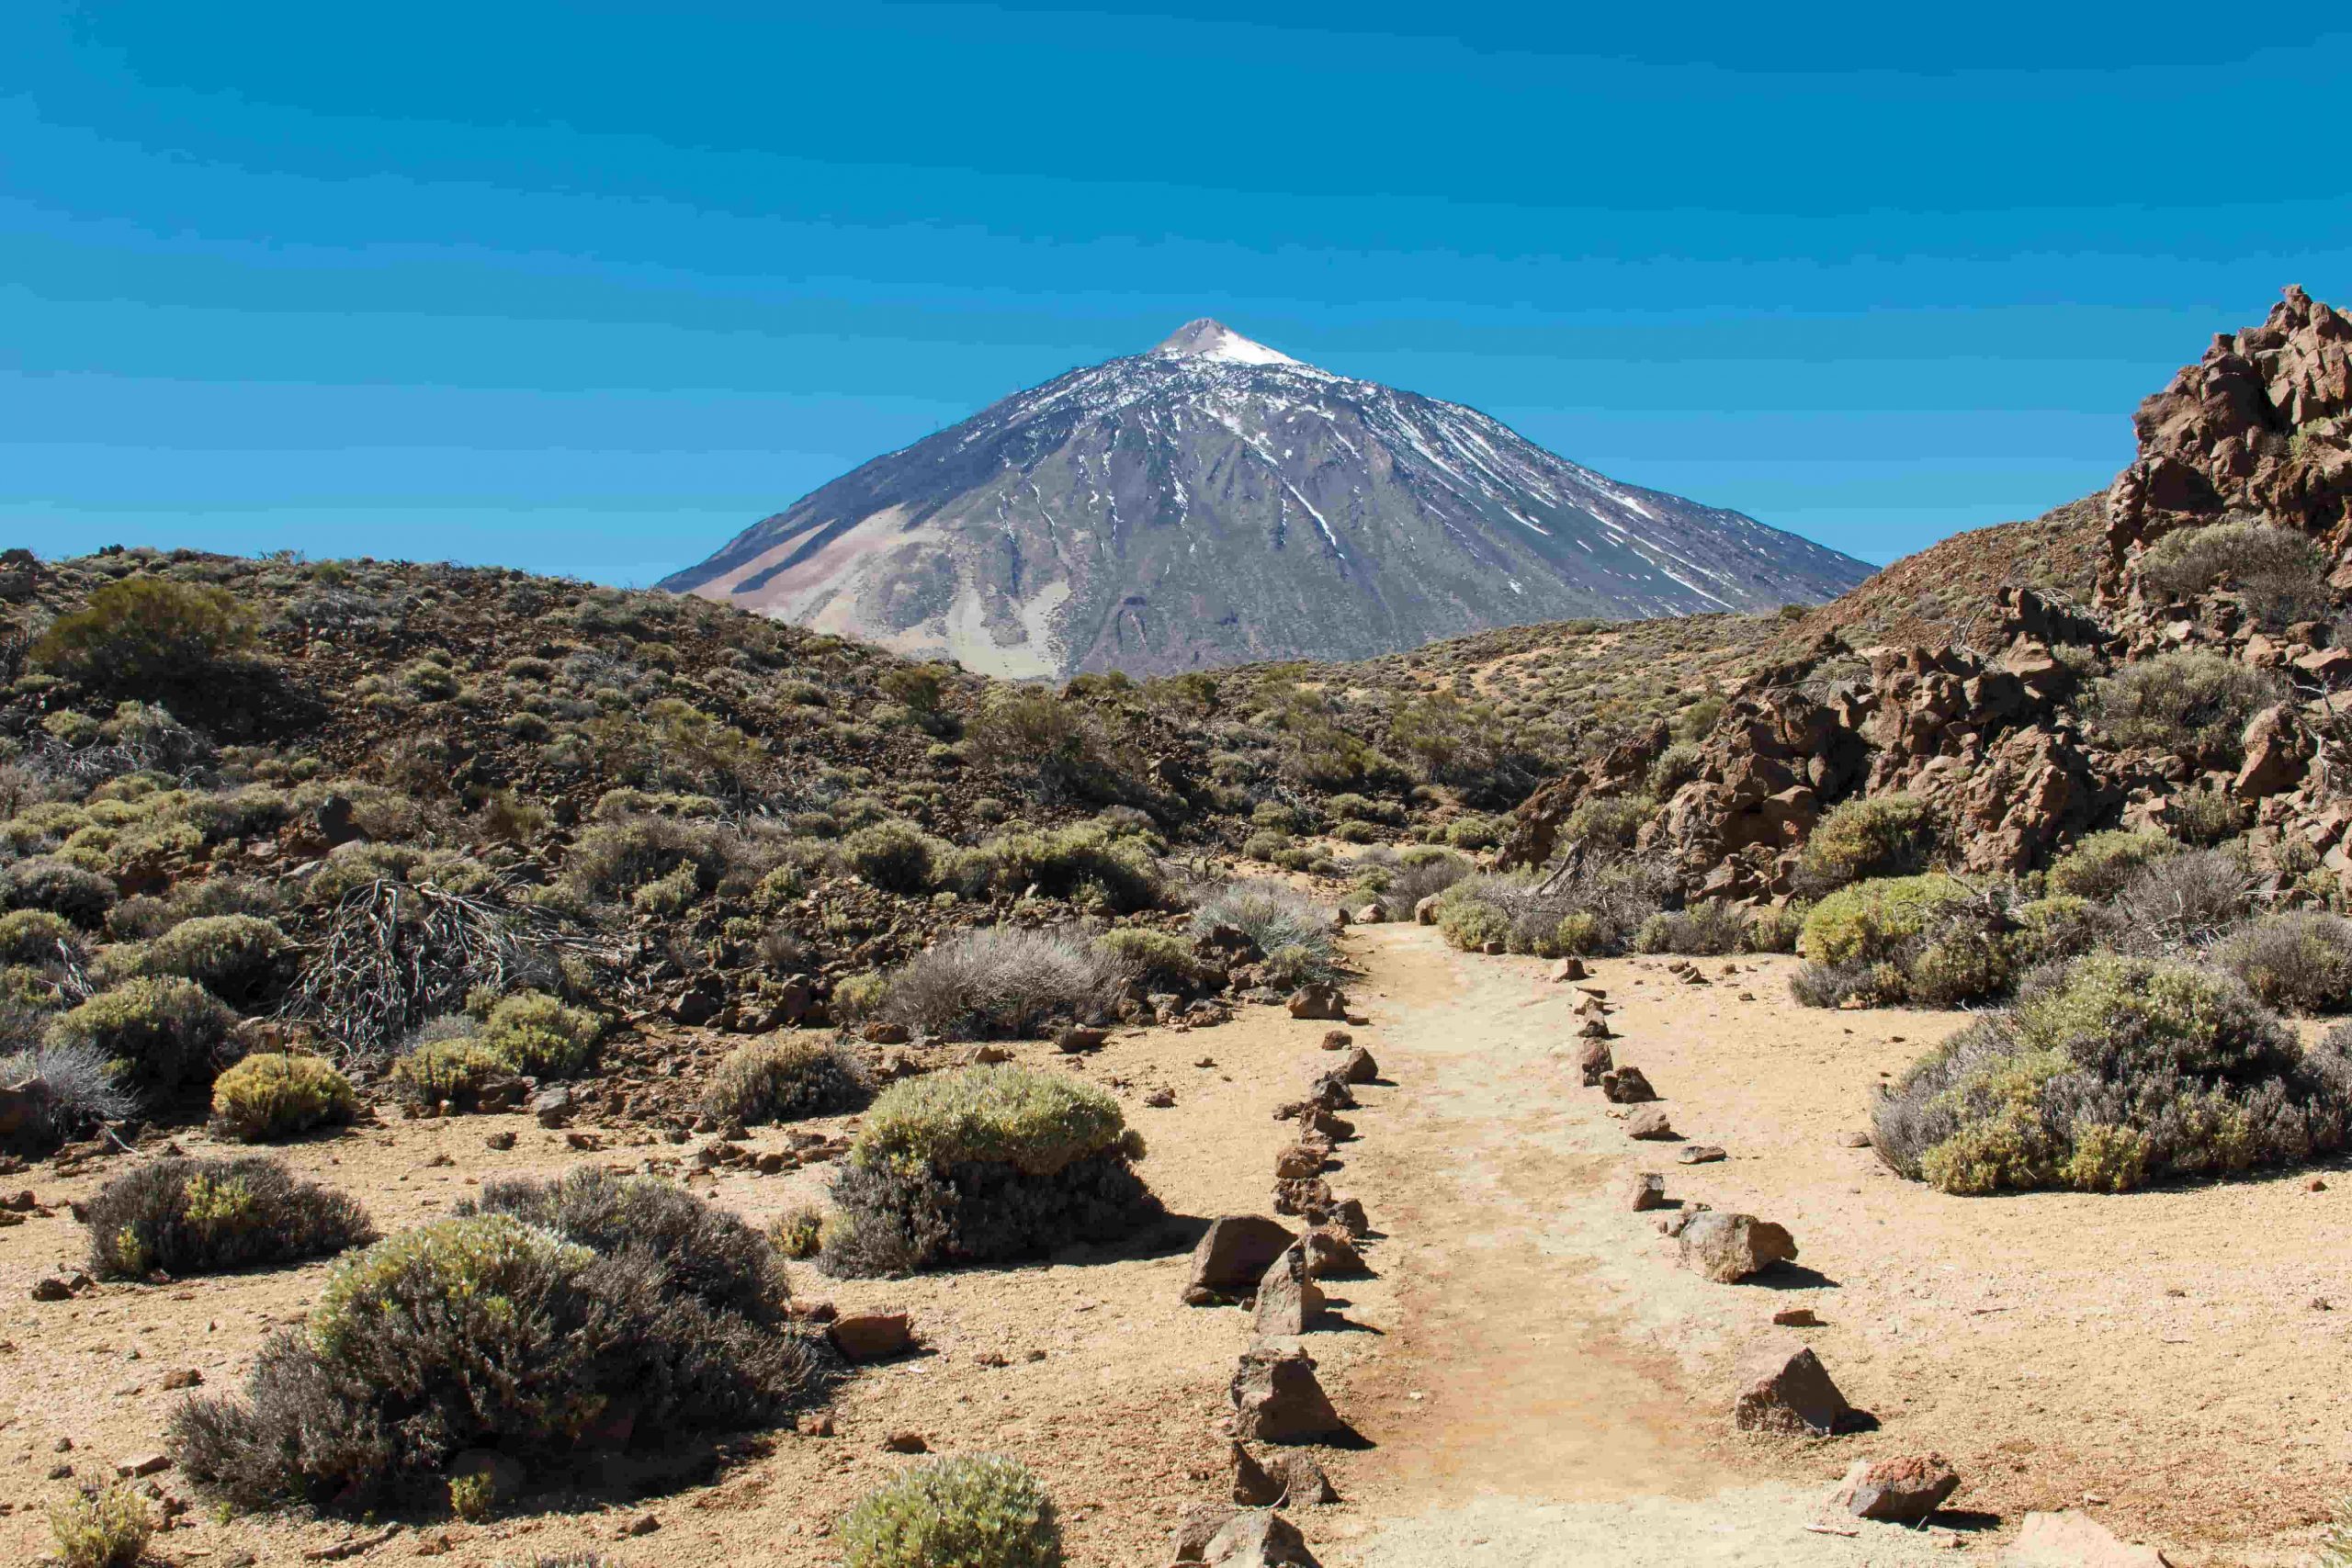 The Teide volcano on Tenerife